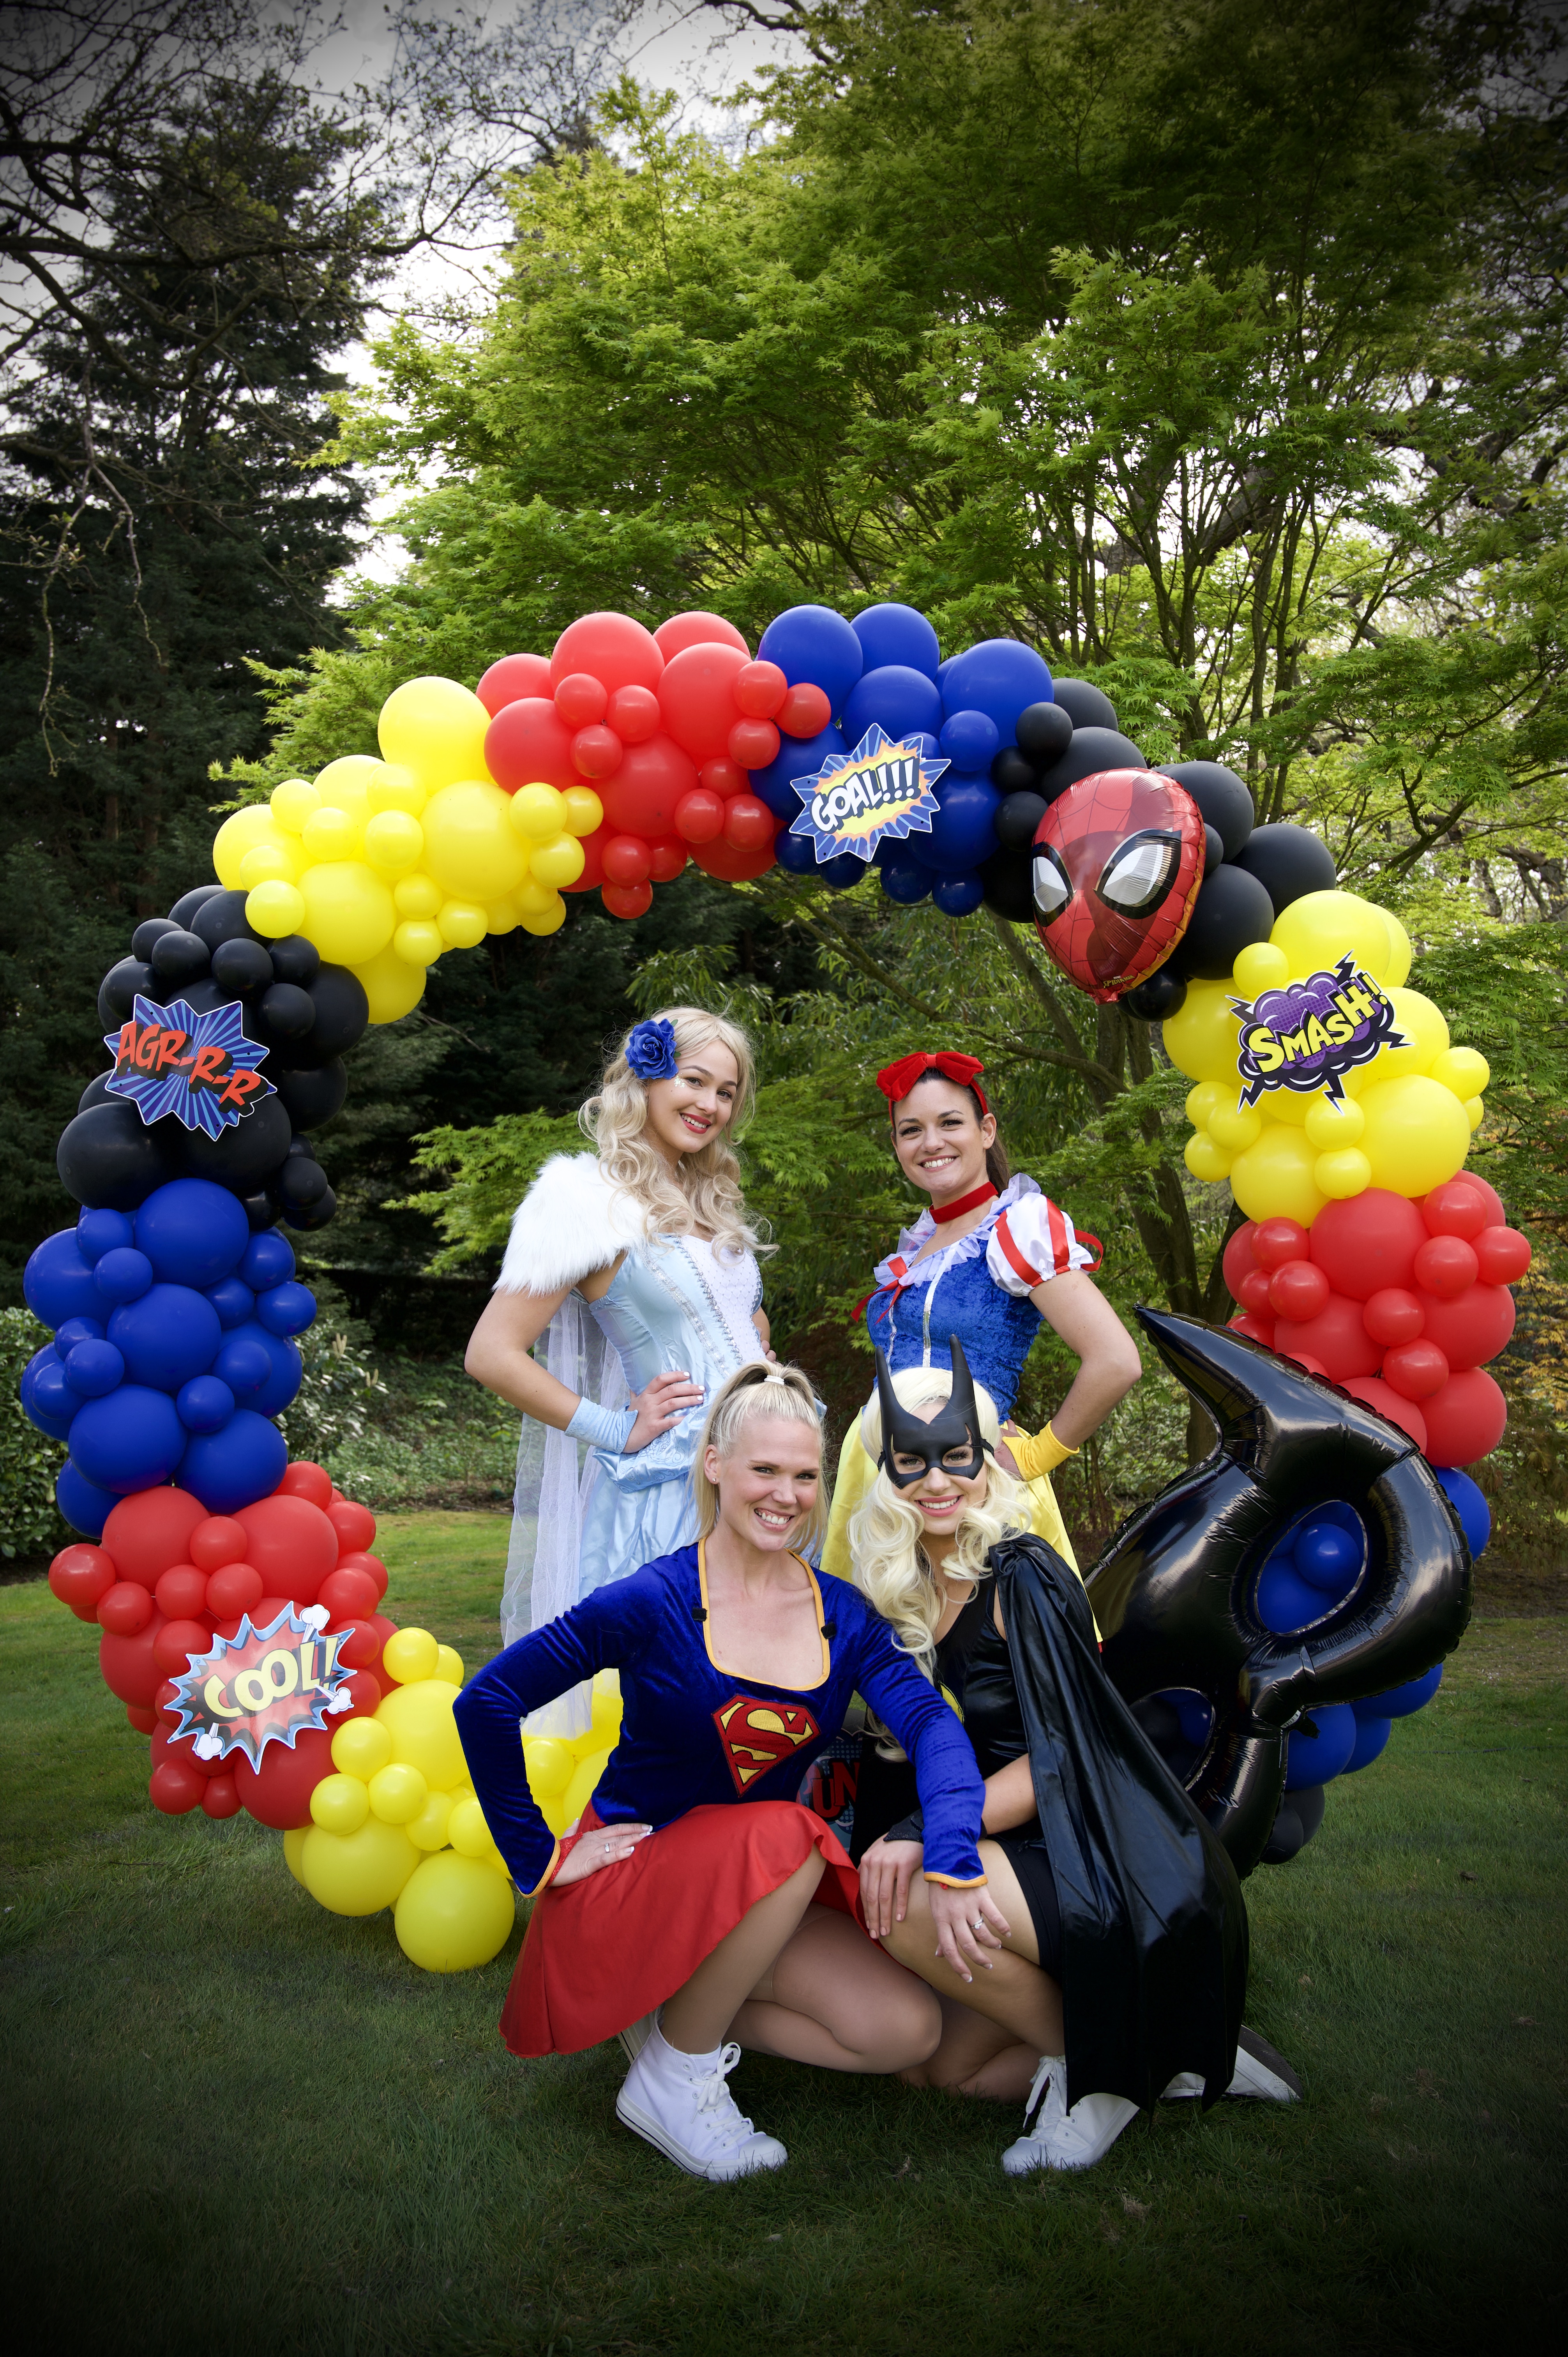 Superhero and Disney princess themed birthday balloons and character dress up